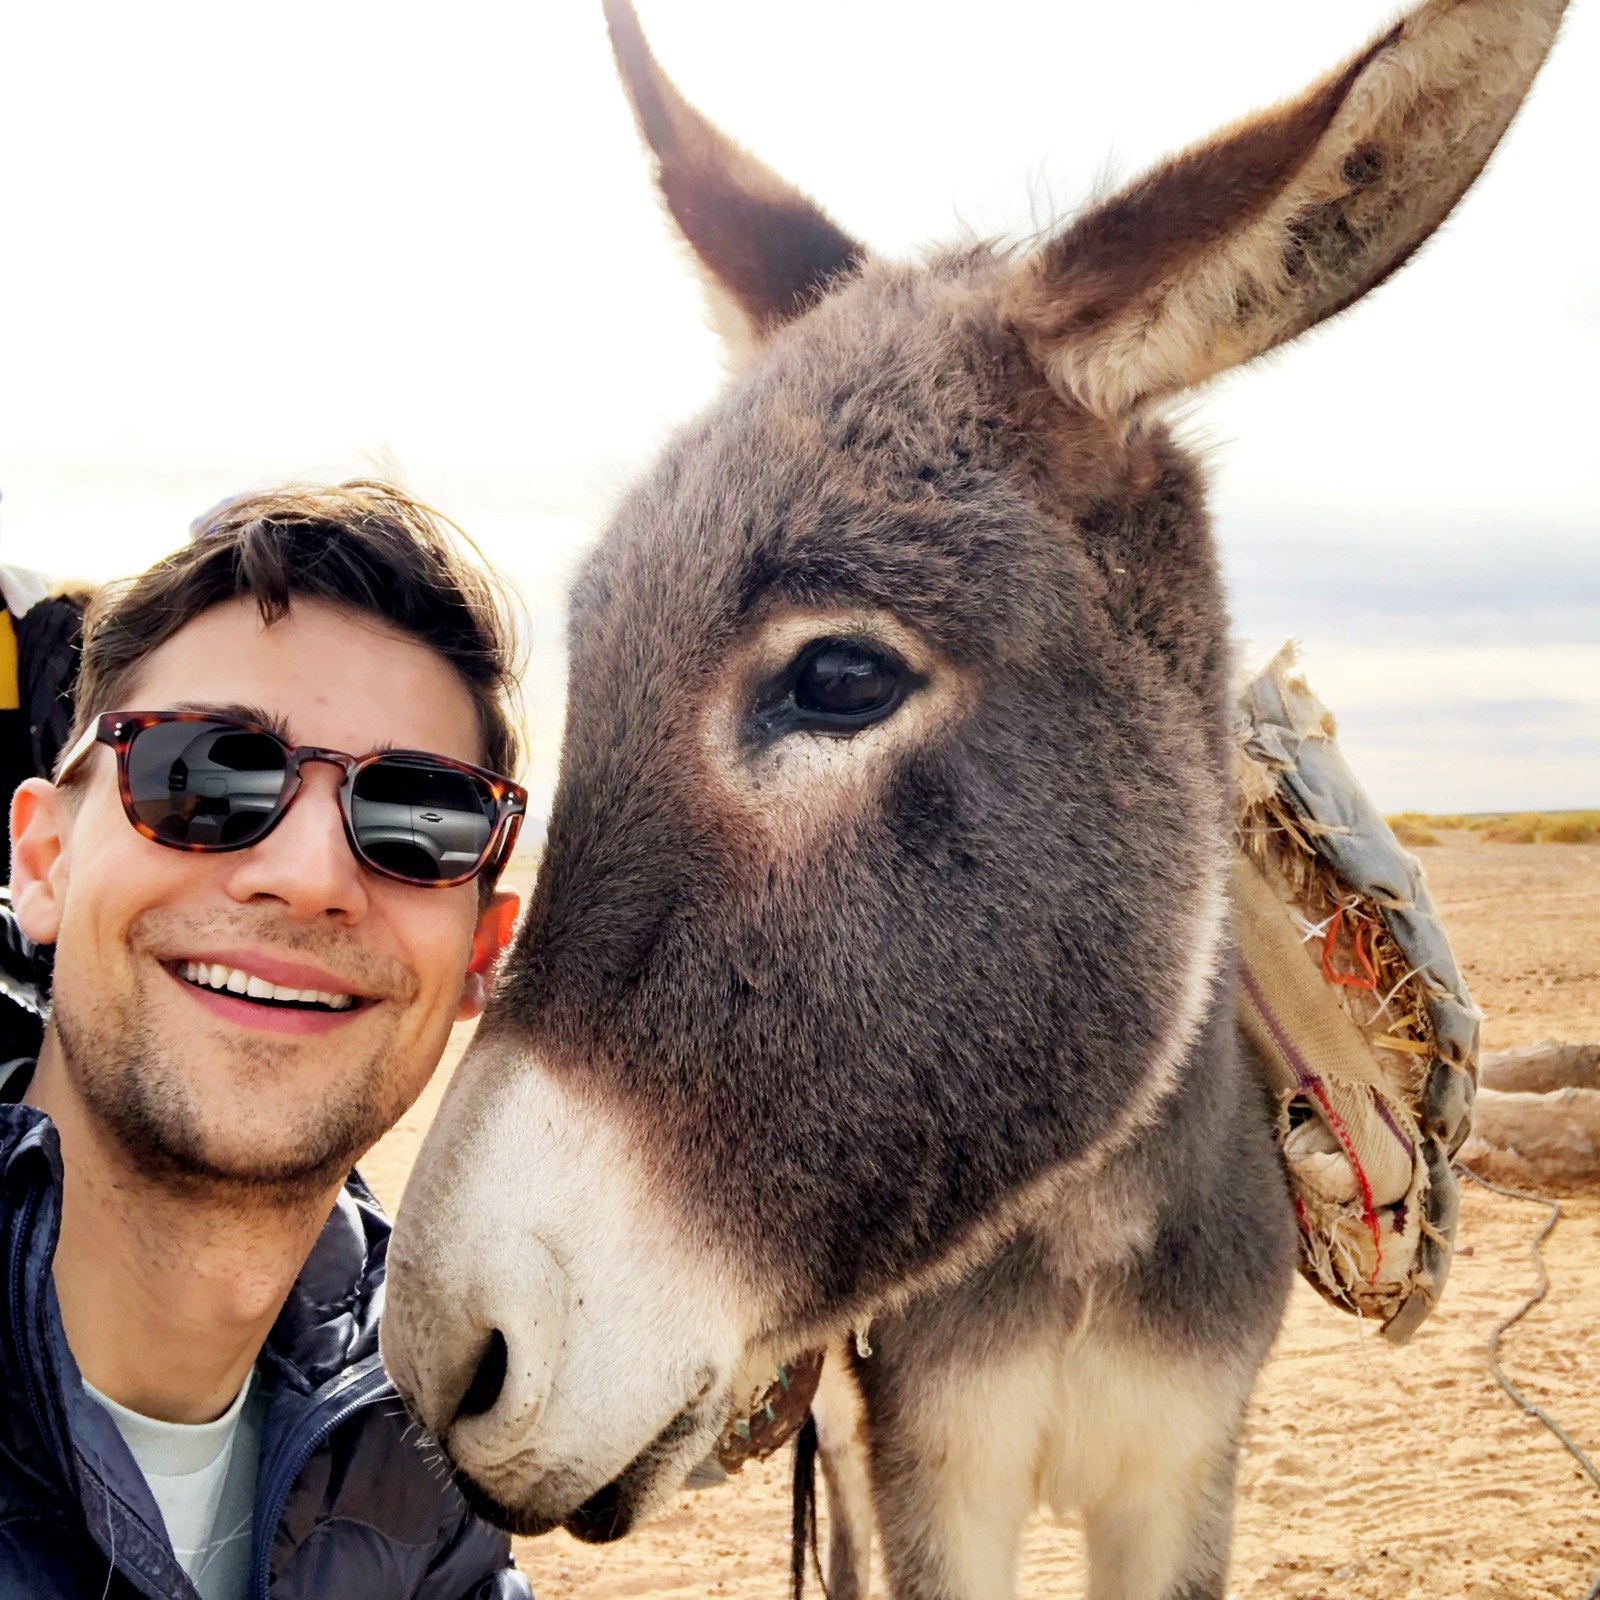 Jeremiah selfie with donkey